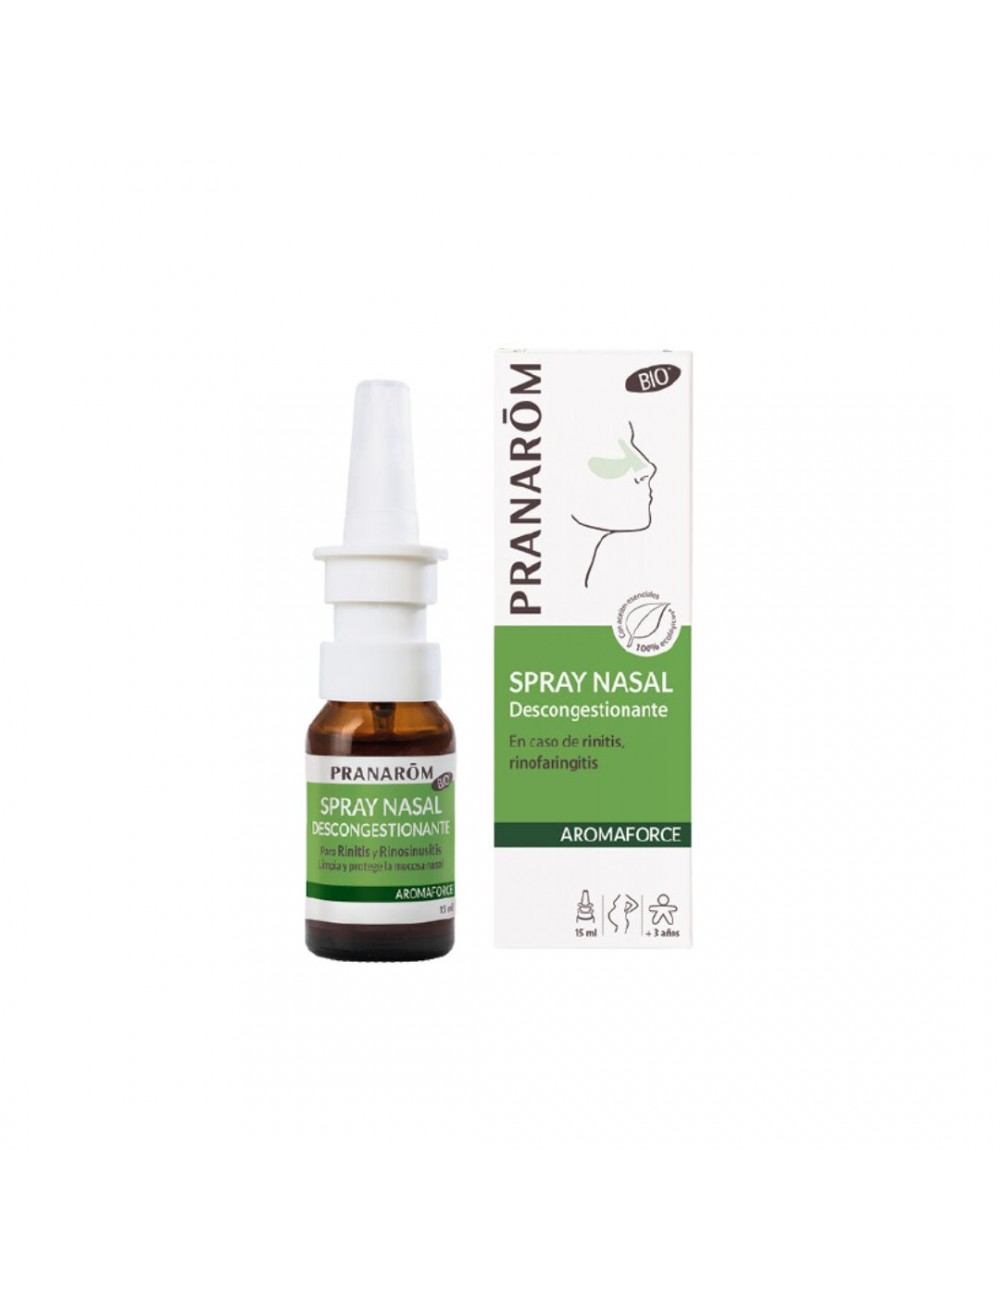 https://www.farmacianautic.com/51048-large_default/pranarom-aromaforce-spray-nasal-15ml.jpg